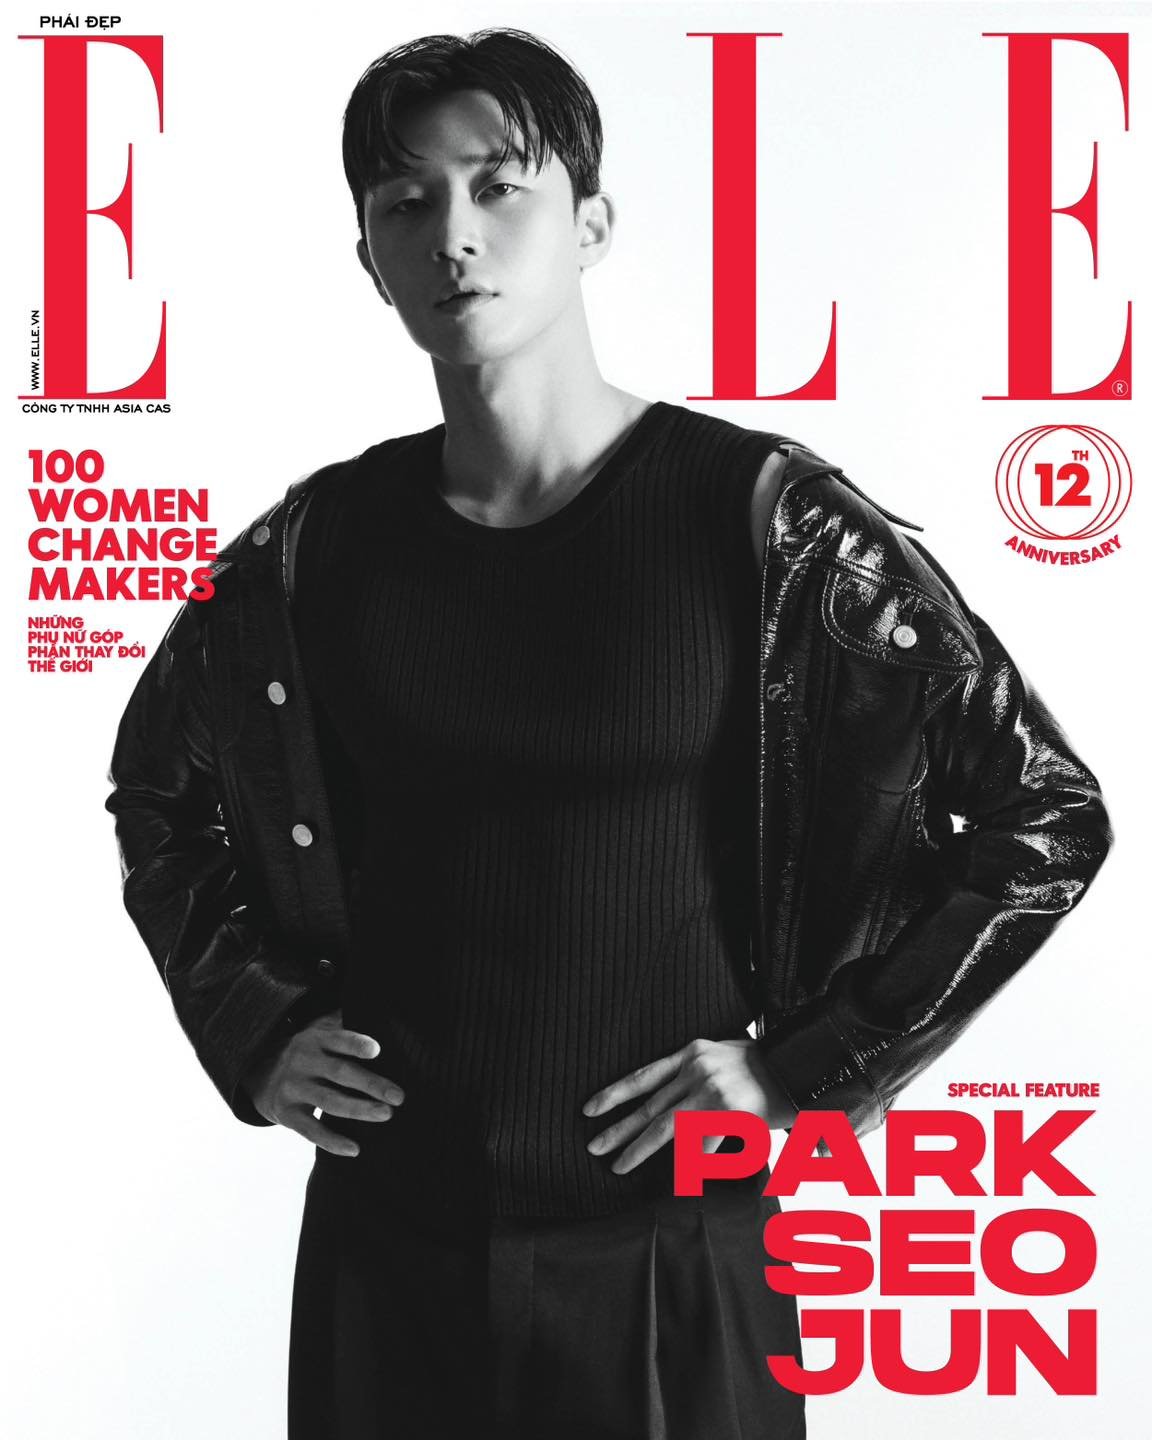 Tạp chí ELLE - Spin off Park Seo Jun